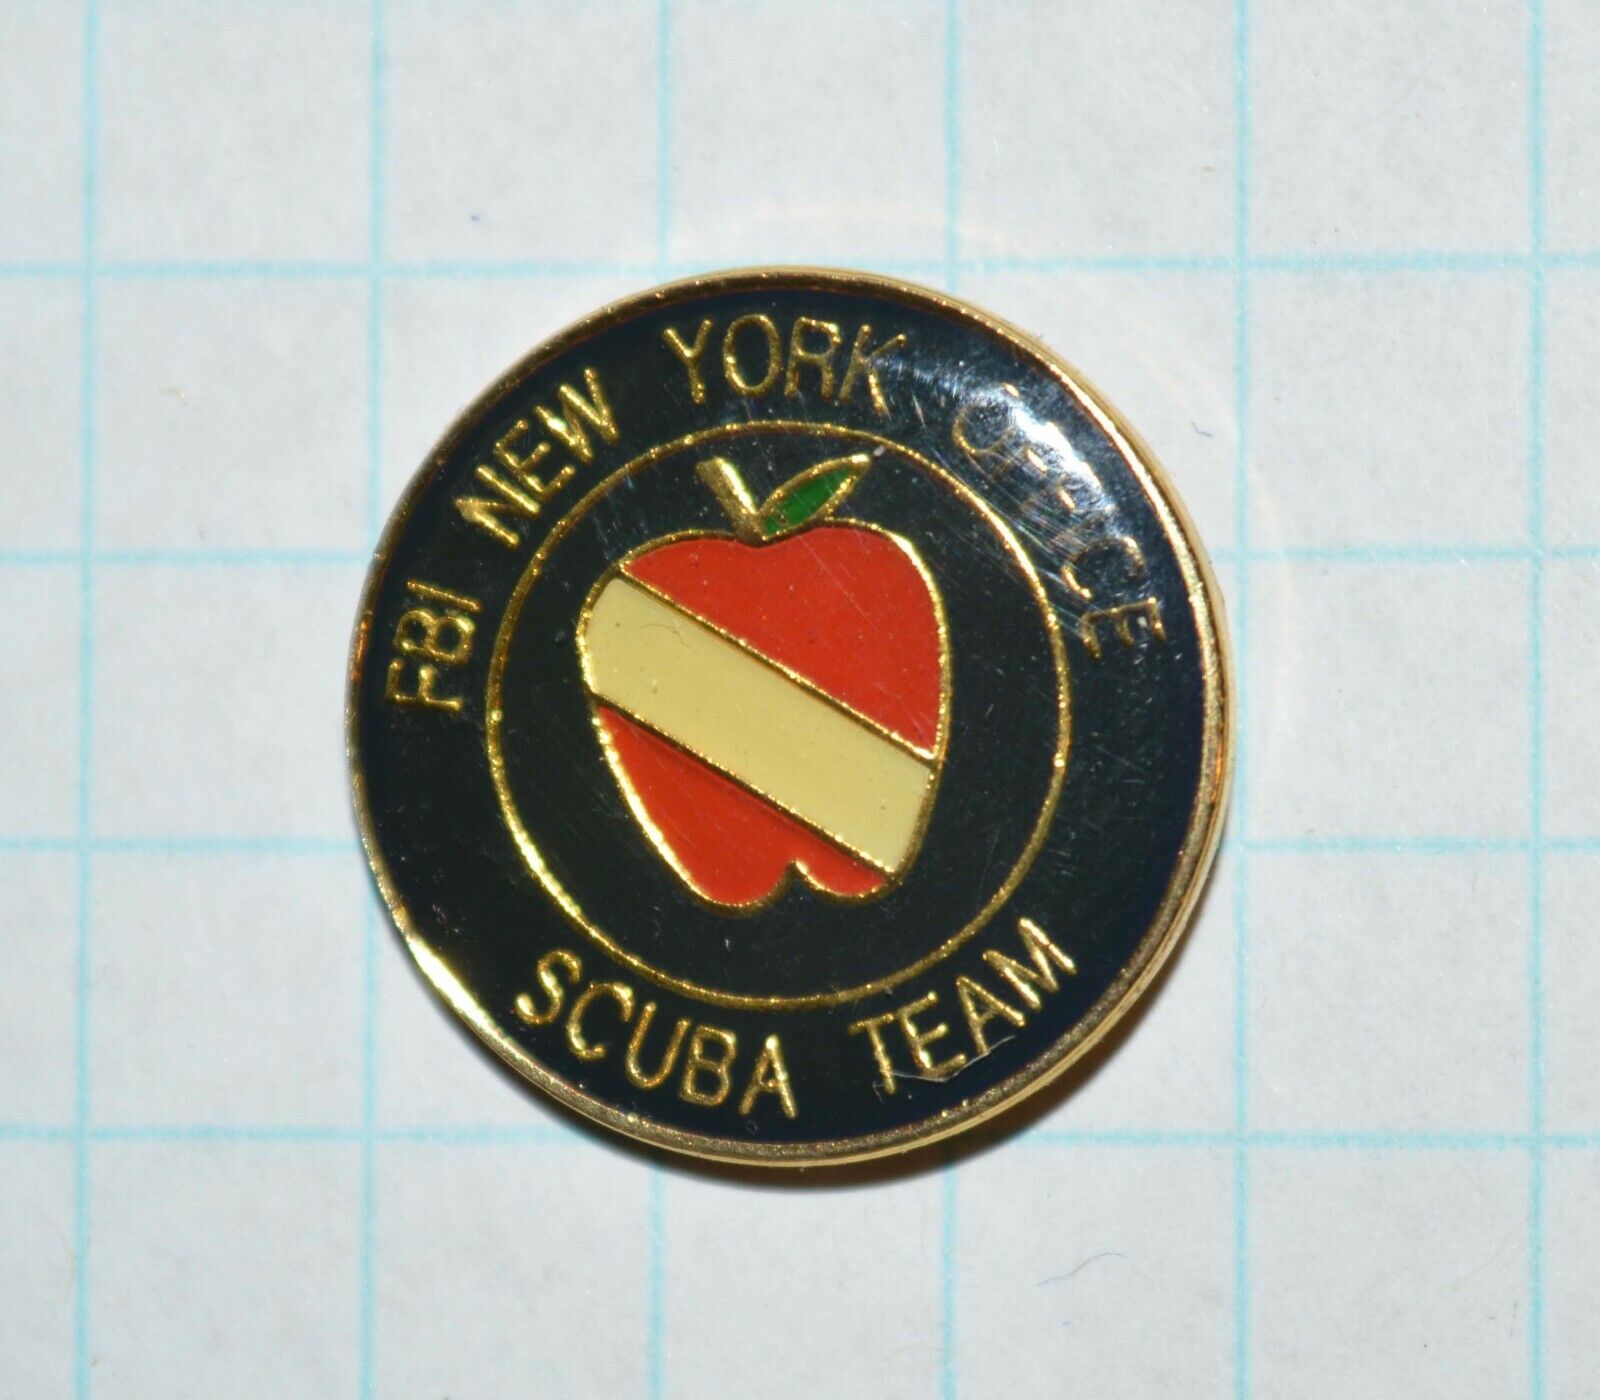 FBI NEW YORK OFFICE SCUBA TEAM 3/4\